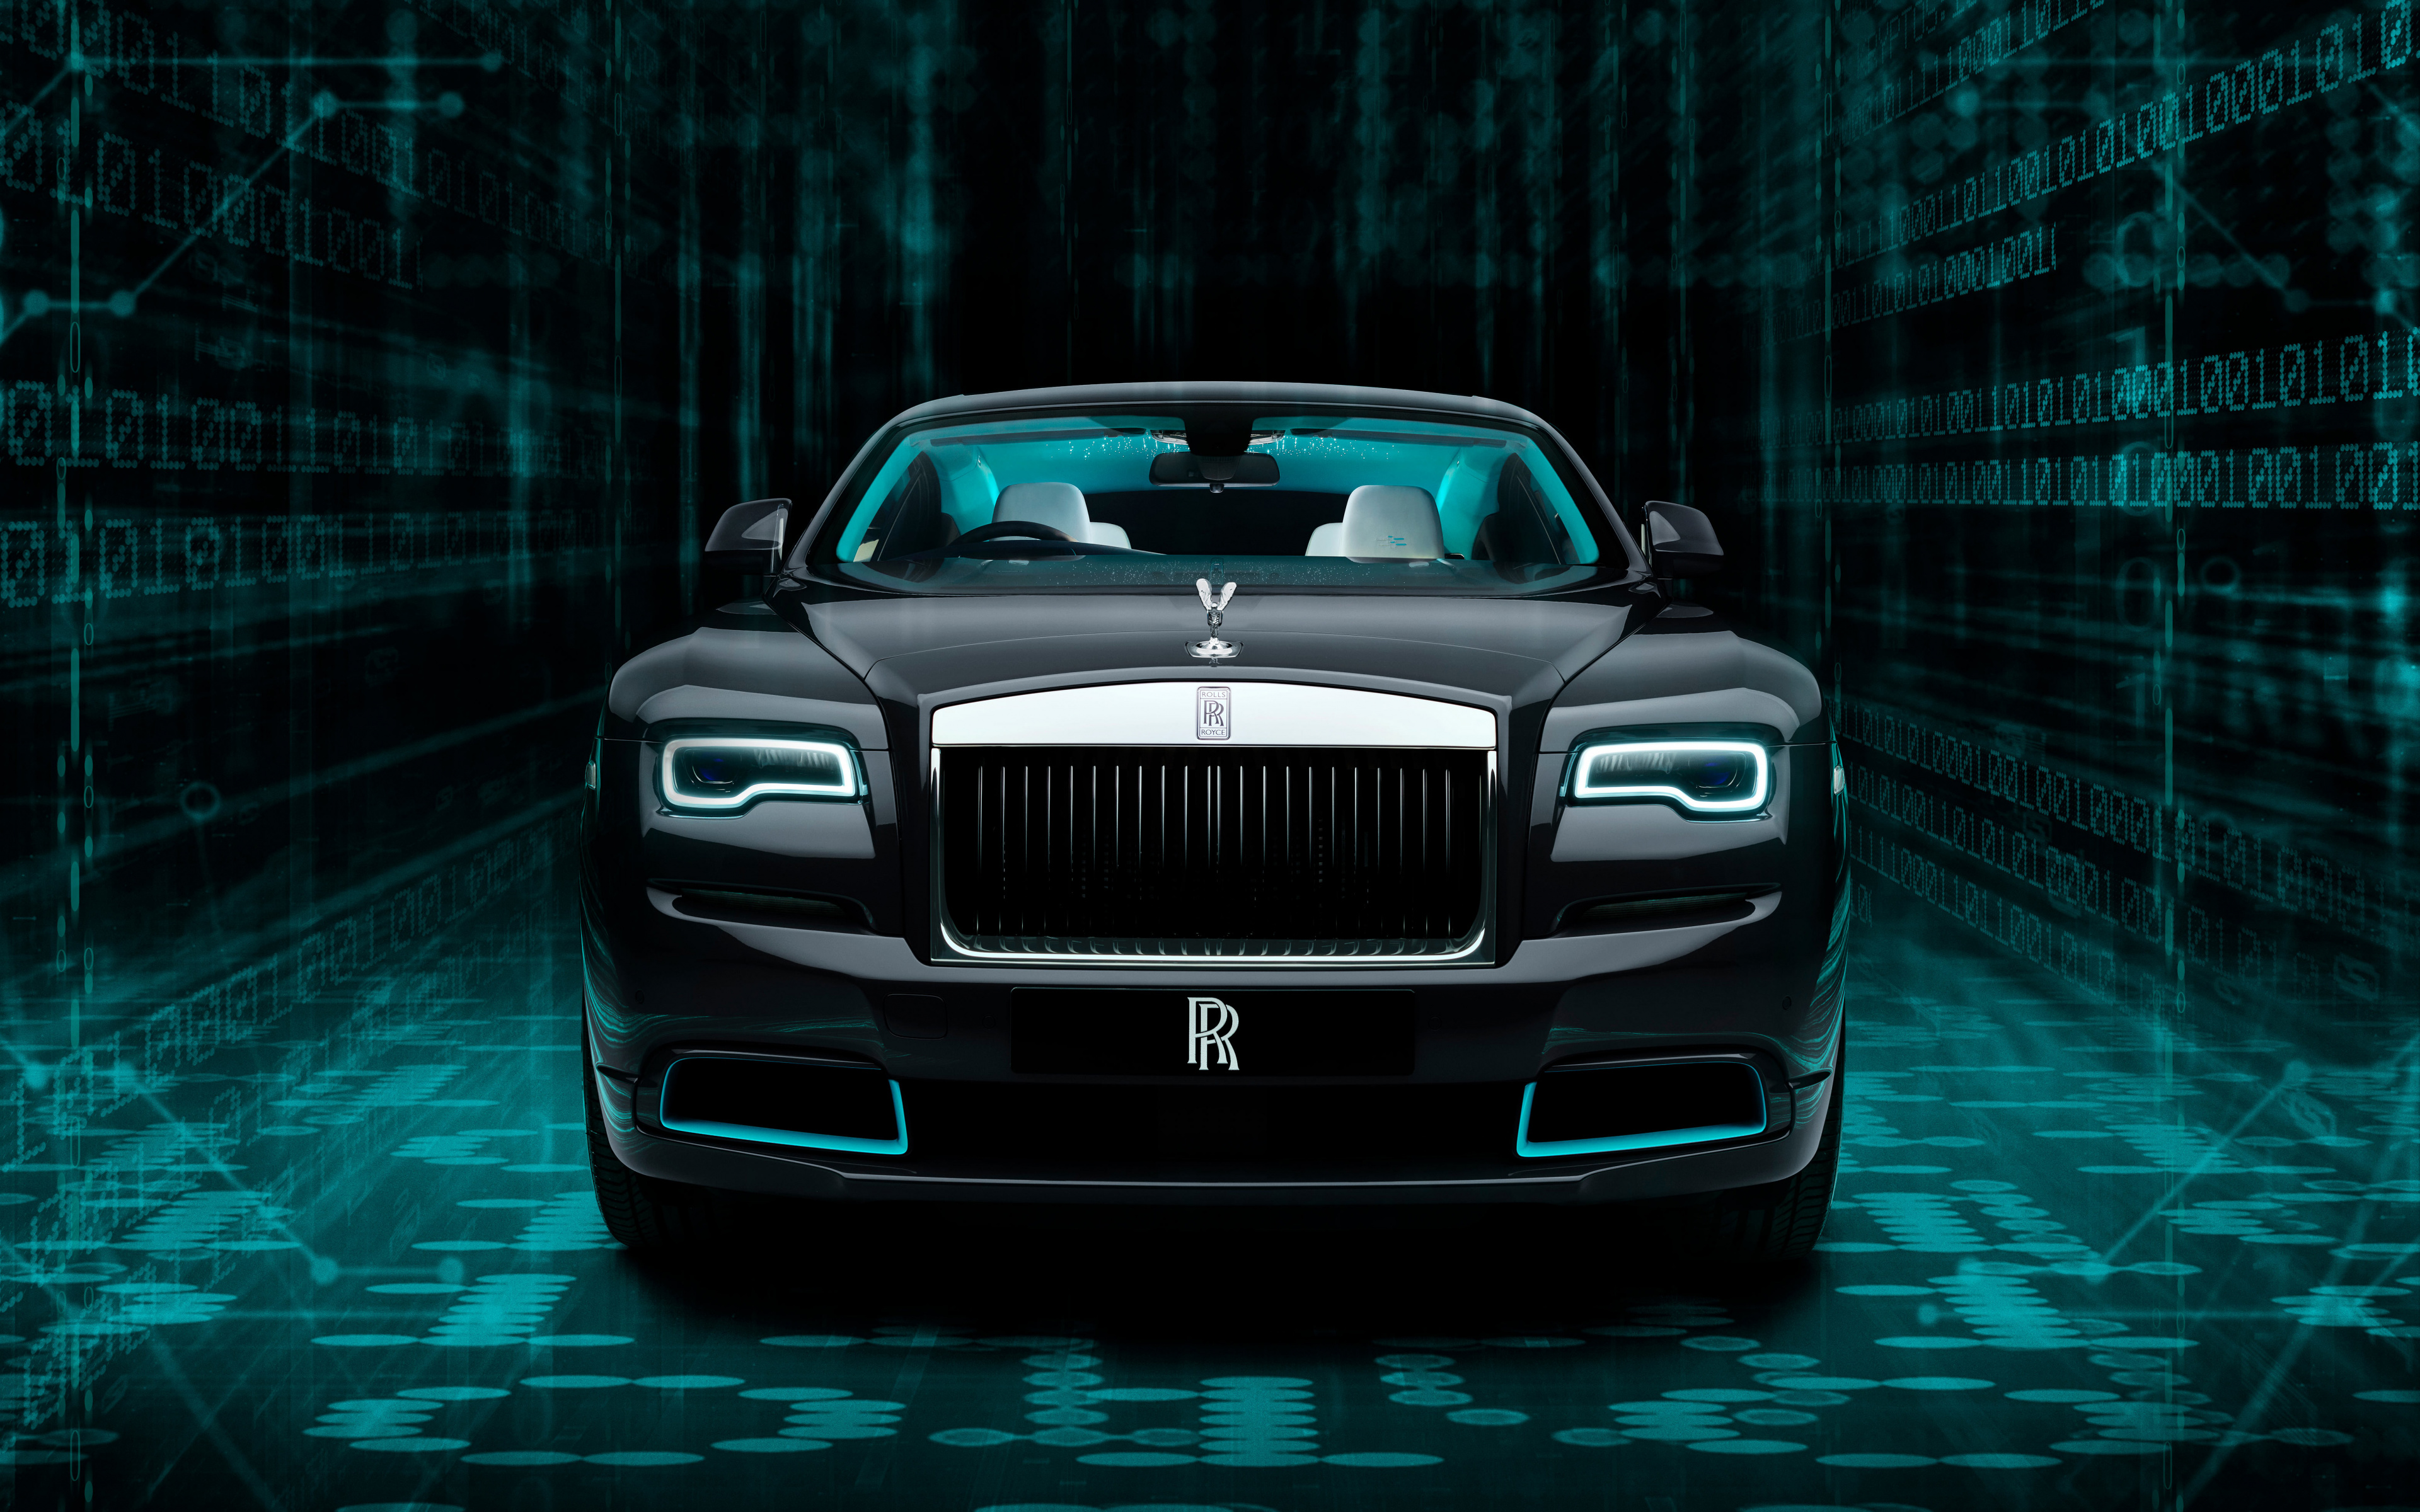 Download Luxurious Black Car, Rolls Royce Wraith, 2020 Wallpaper, 3840x 4K Ultra HD 16: Widescreen